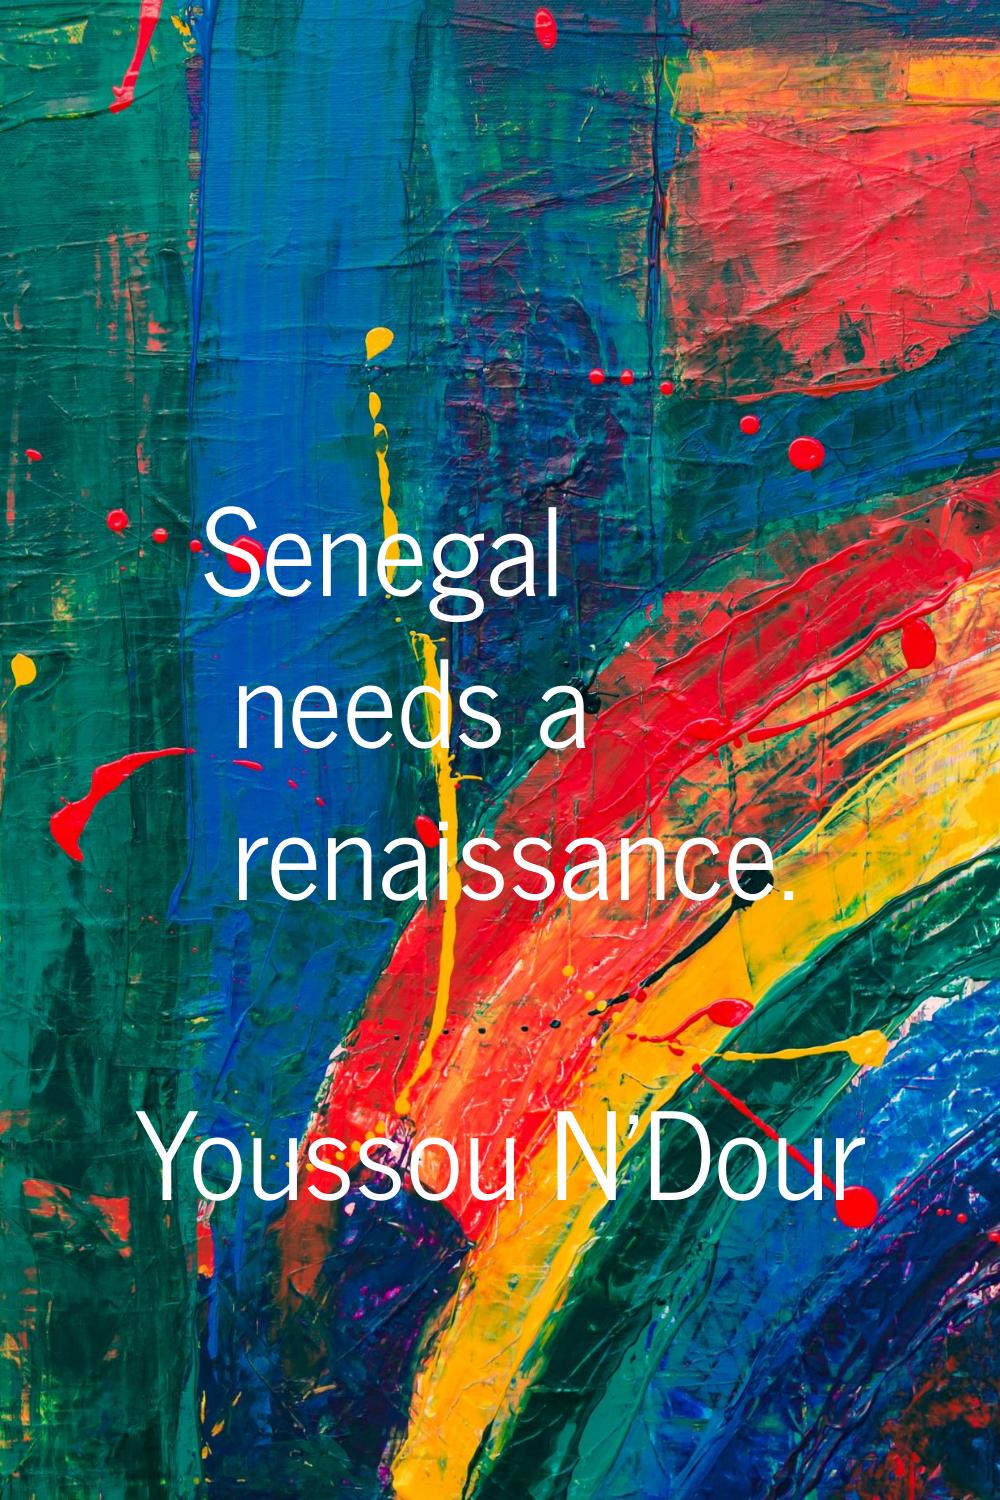 Senegal needs a renaissance.